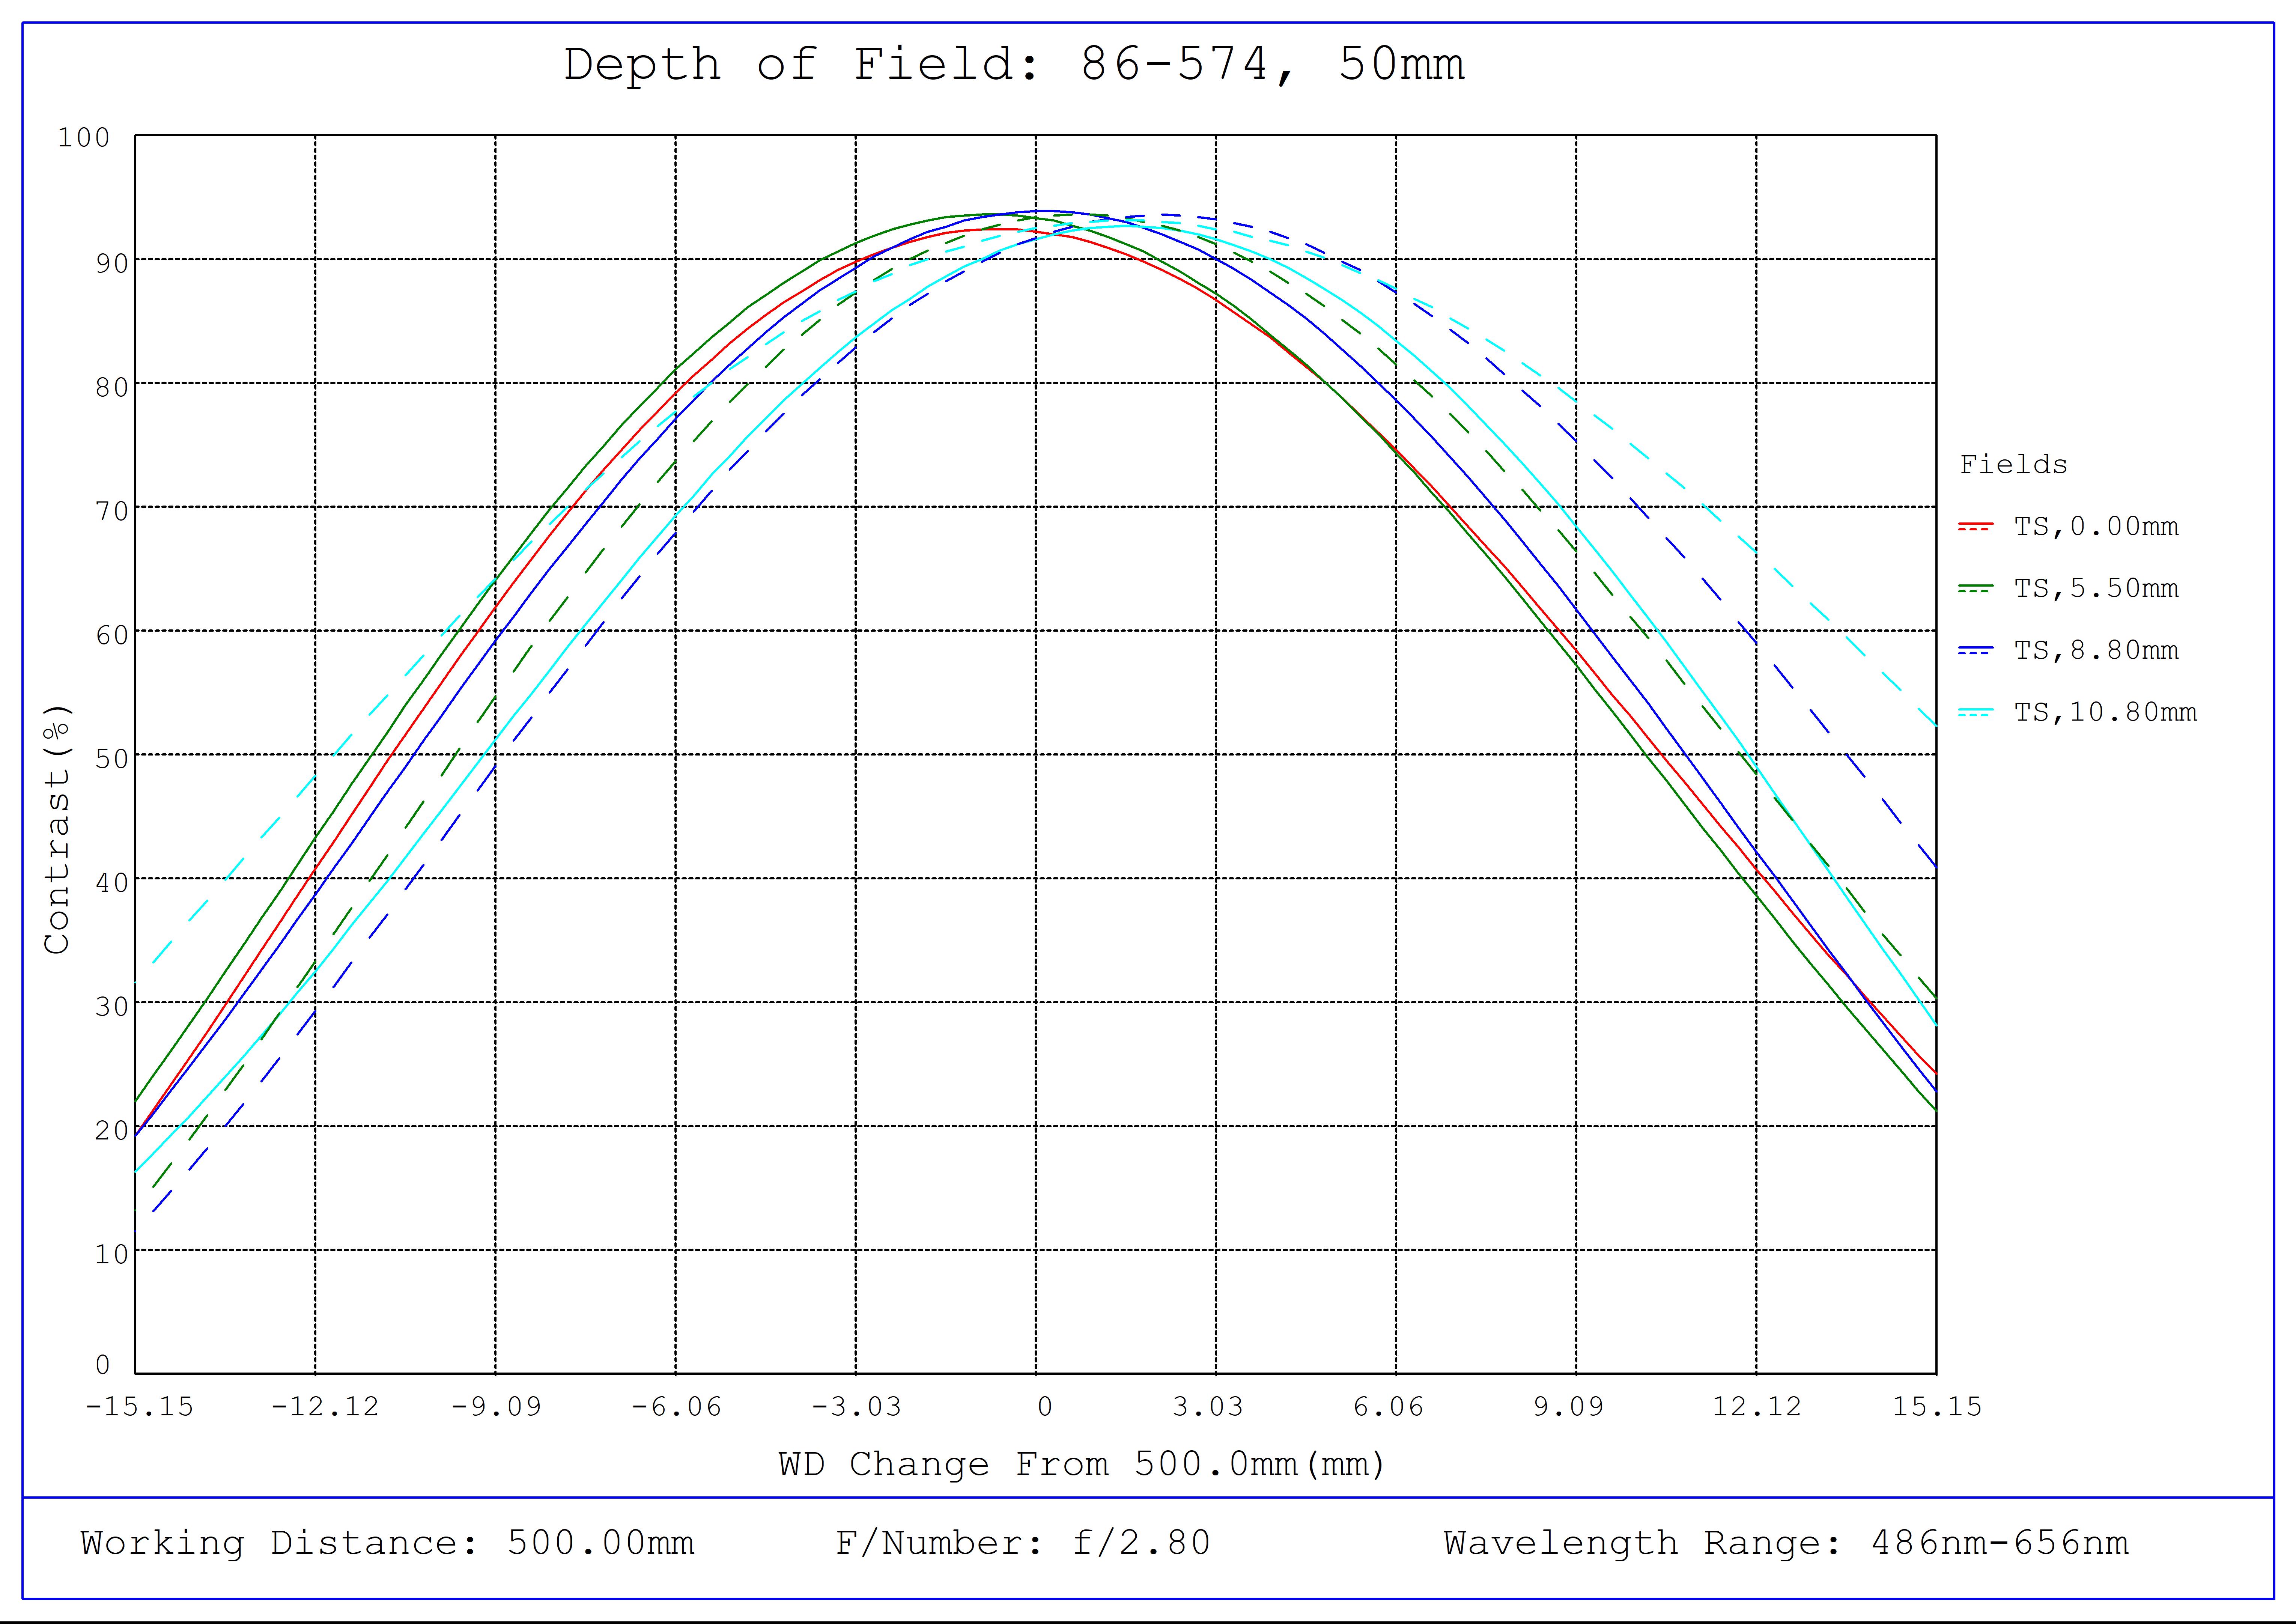 #86-574, 50mm Focal Length, HP Series Fixed Focal Length Lens, Depth of Field Plot, 500mm Working Distance, f2.8